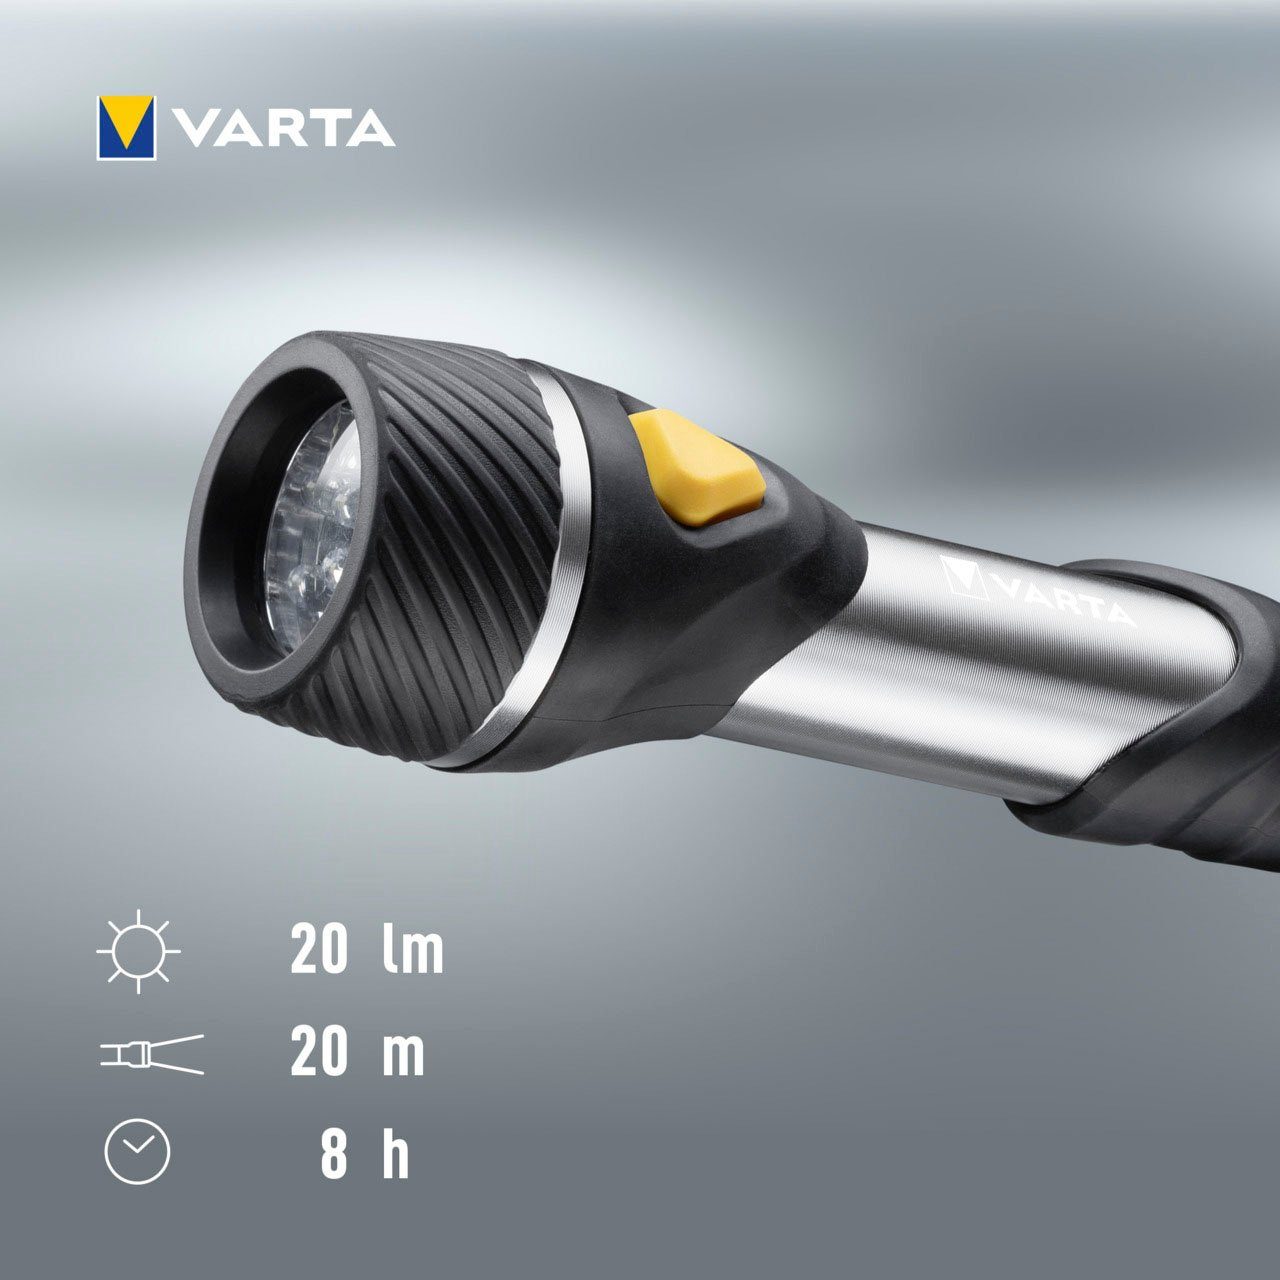 VARTA Taschenlampe Taschenlampe 5 Multi LED Light LEDs mit Day F10 VARTA